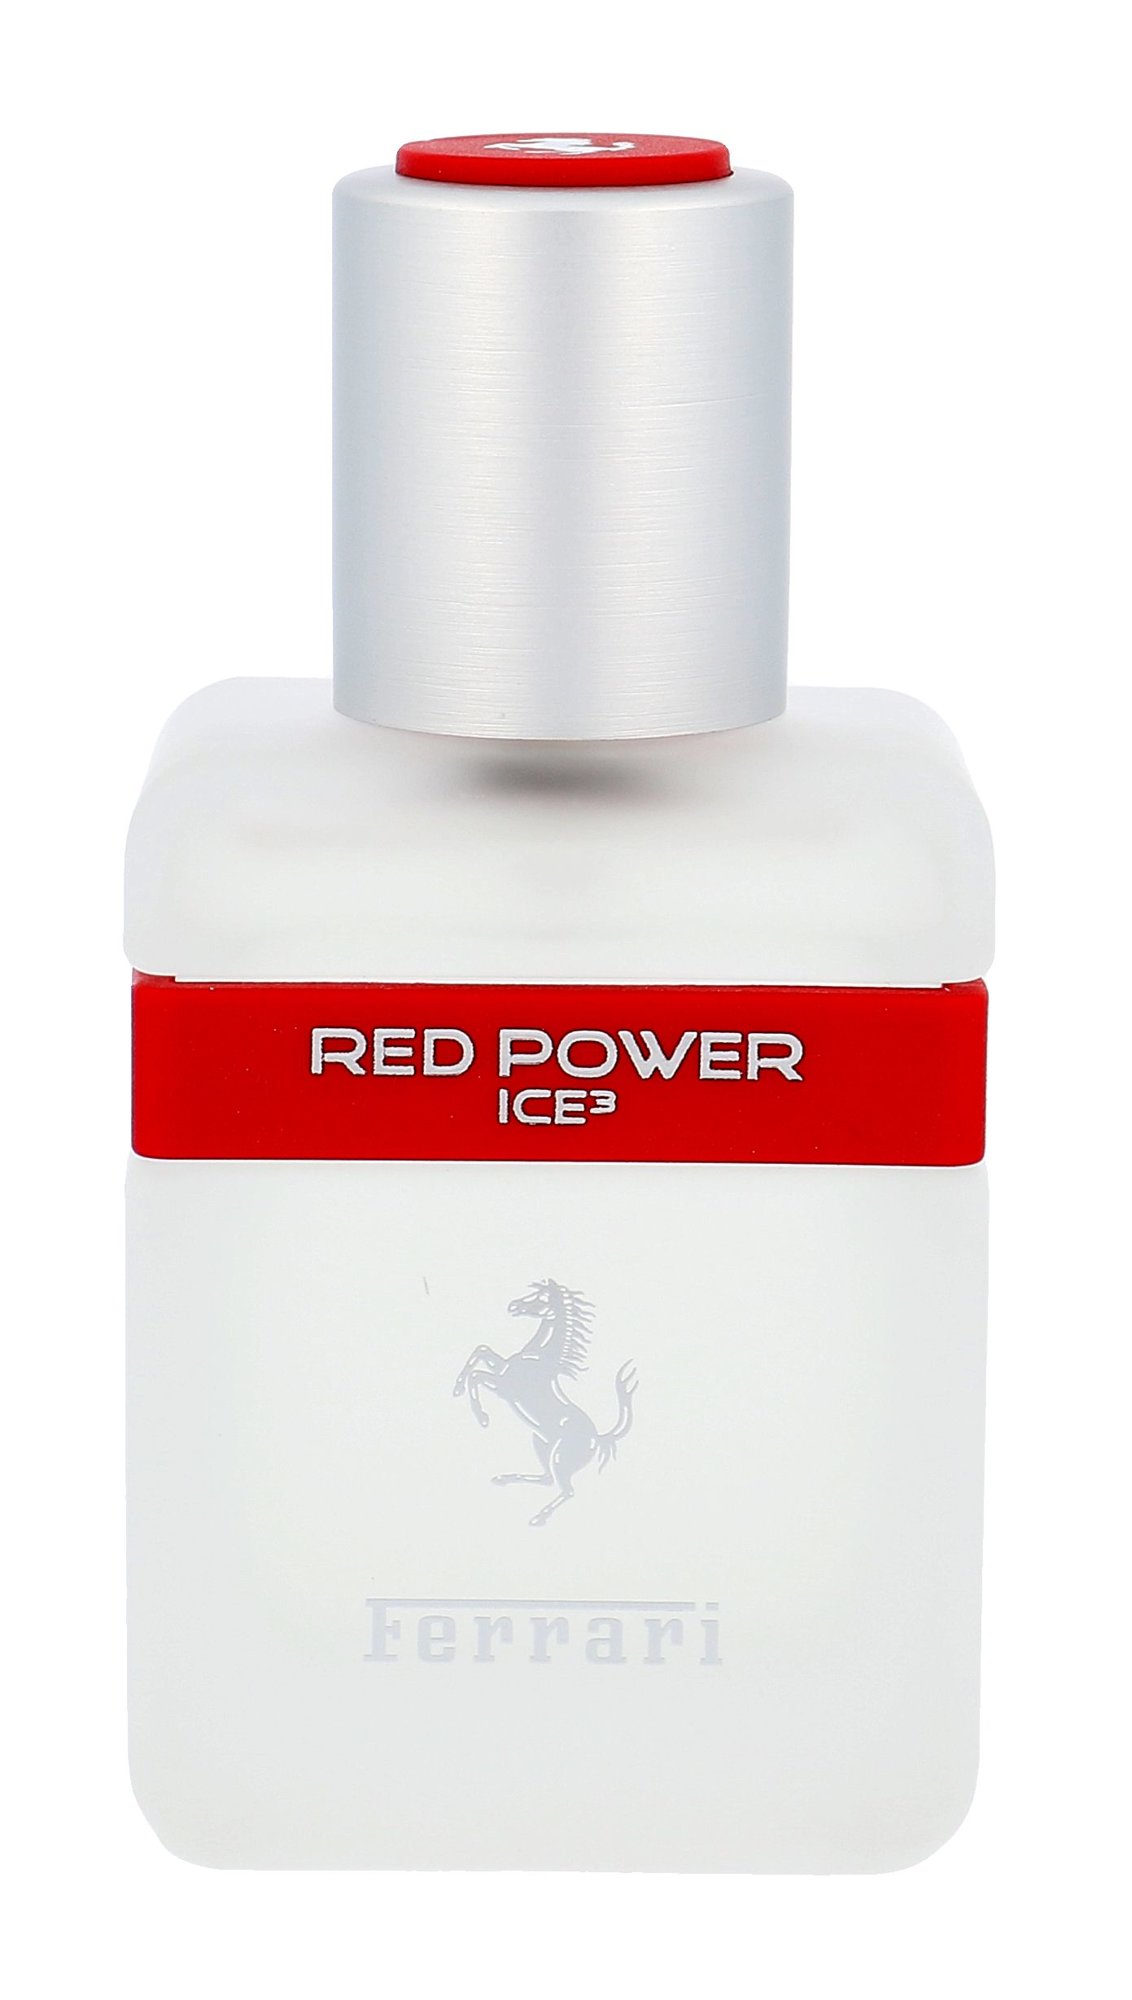 Ferrari Red Power Ice 3